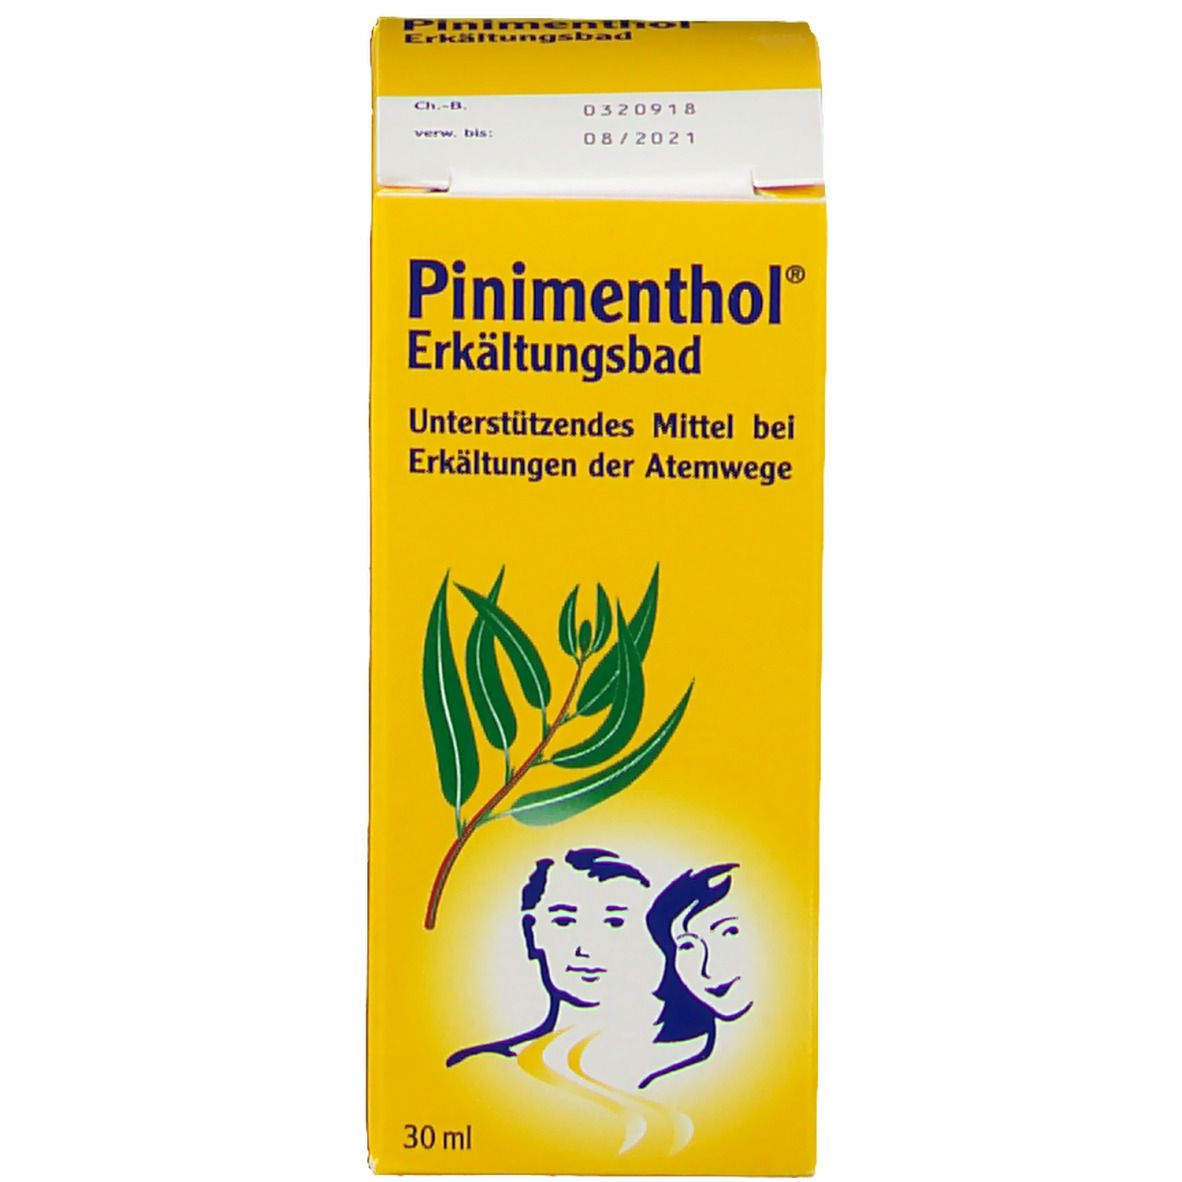 Pinimenthol® Erkältungsbad